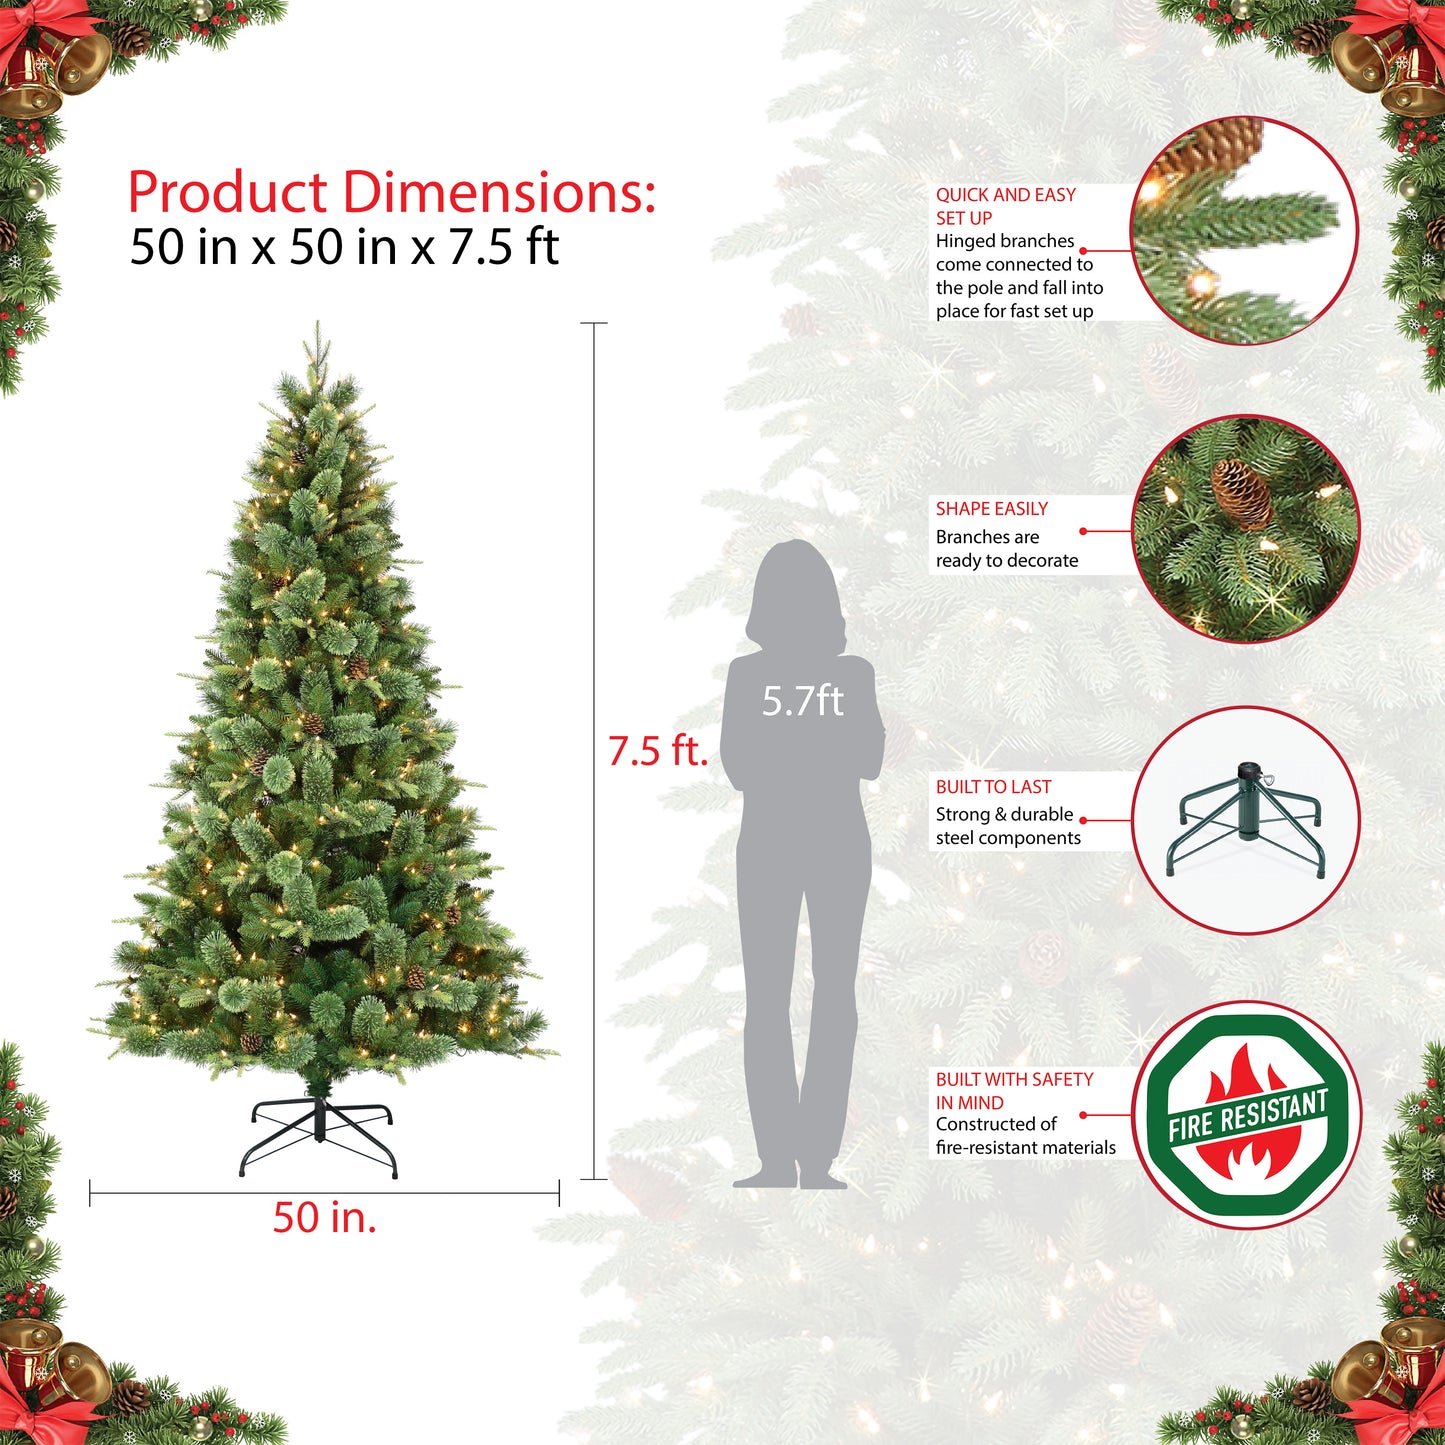 Pre-Lit 7.5' Montana Pine Artificial Christmas Tree with 700 Lights, Green